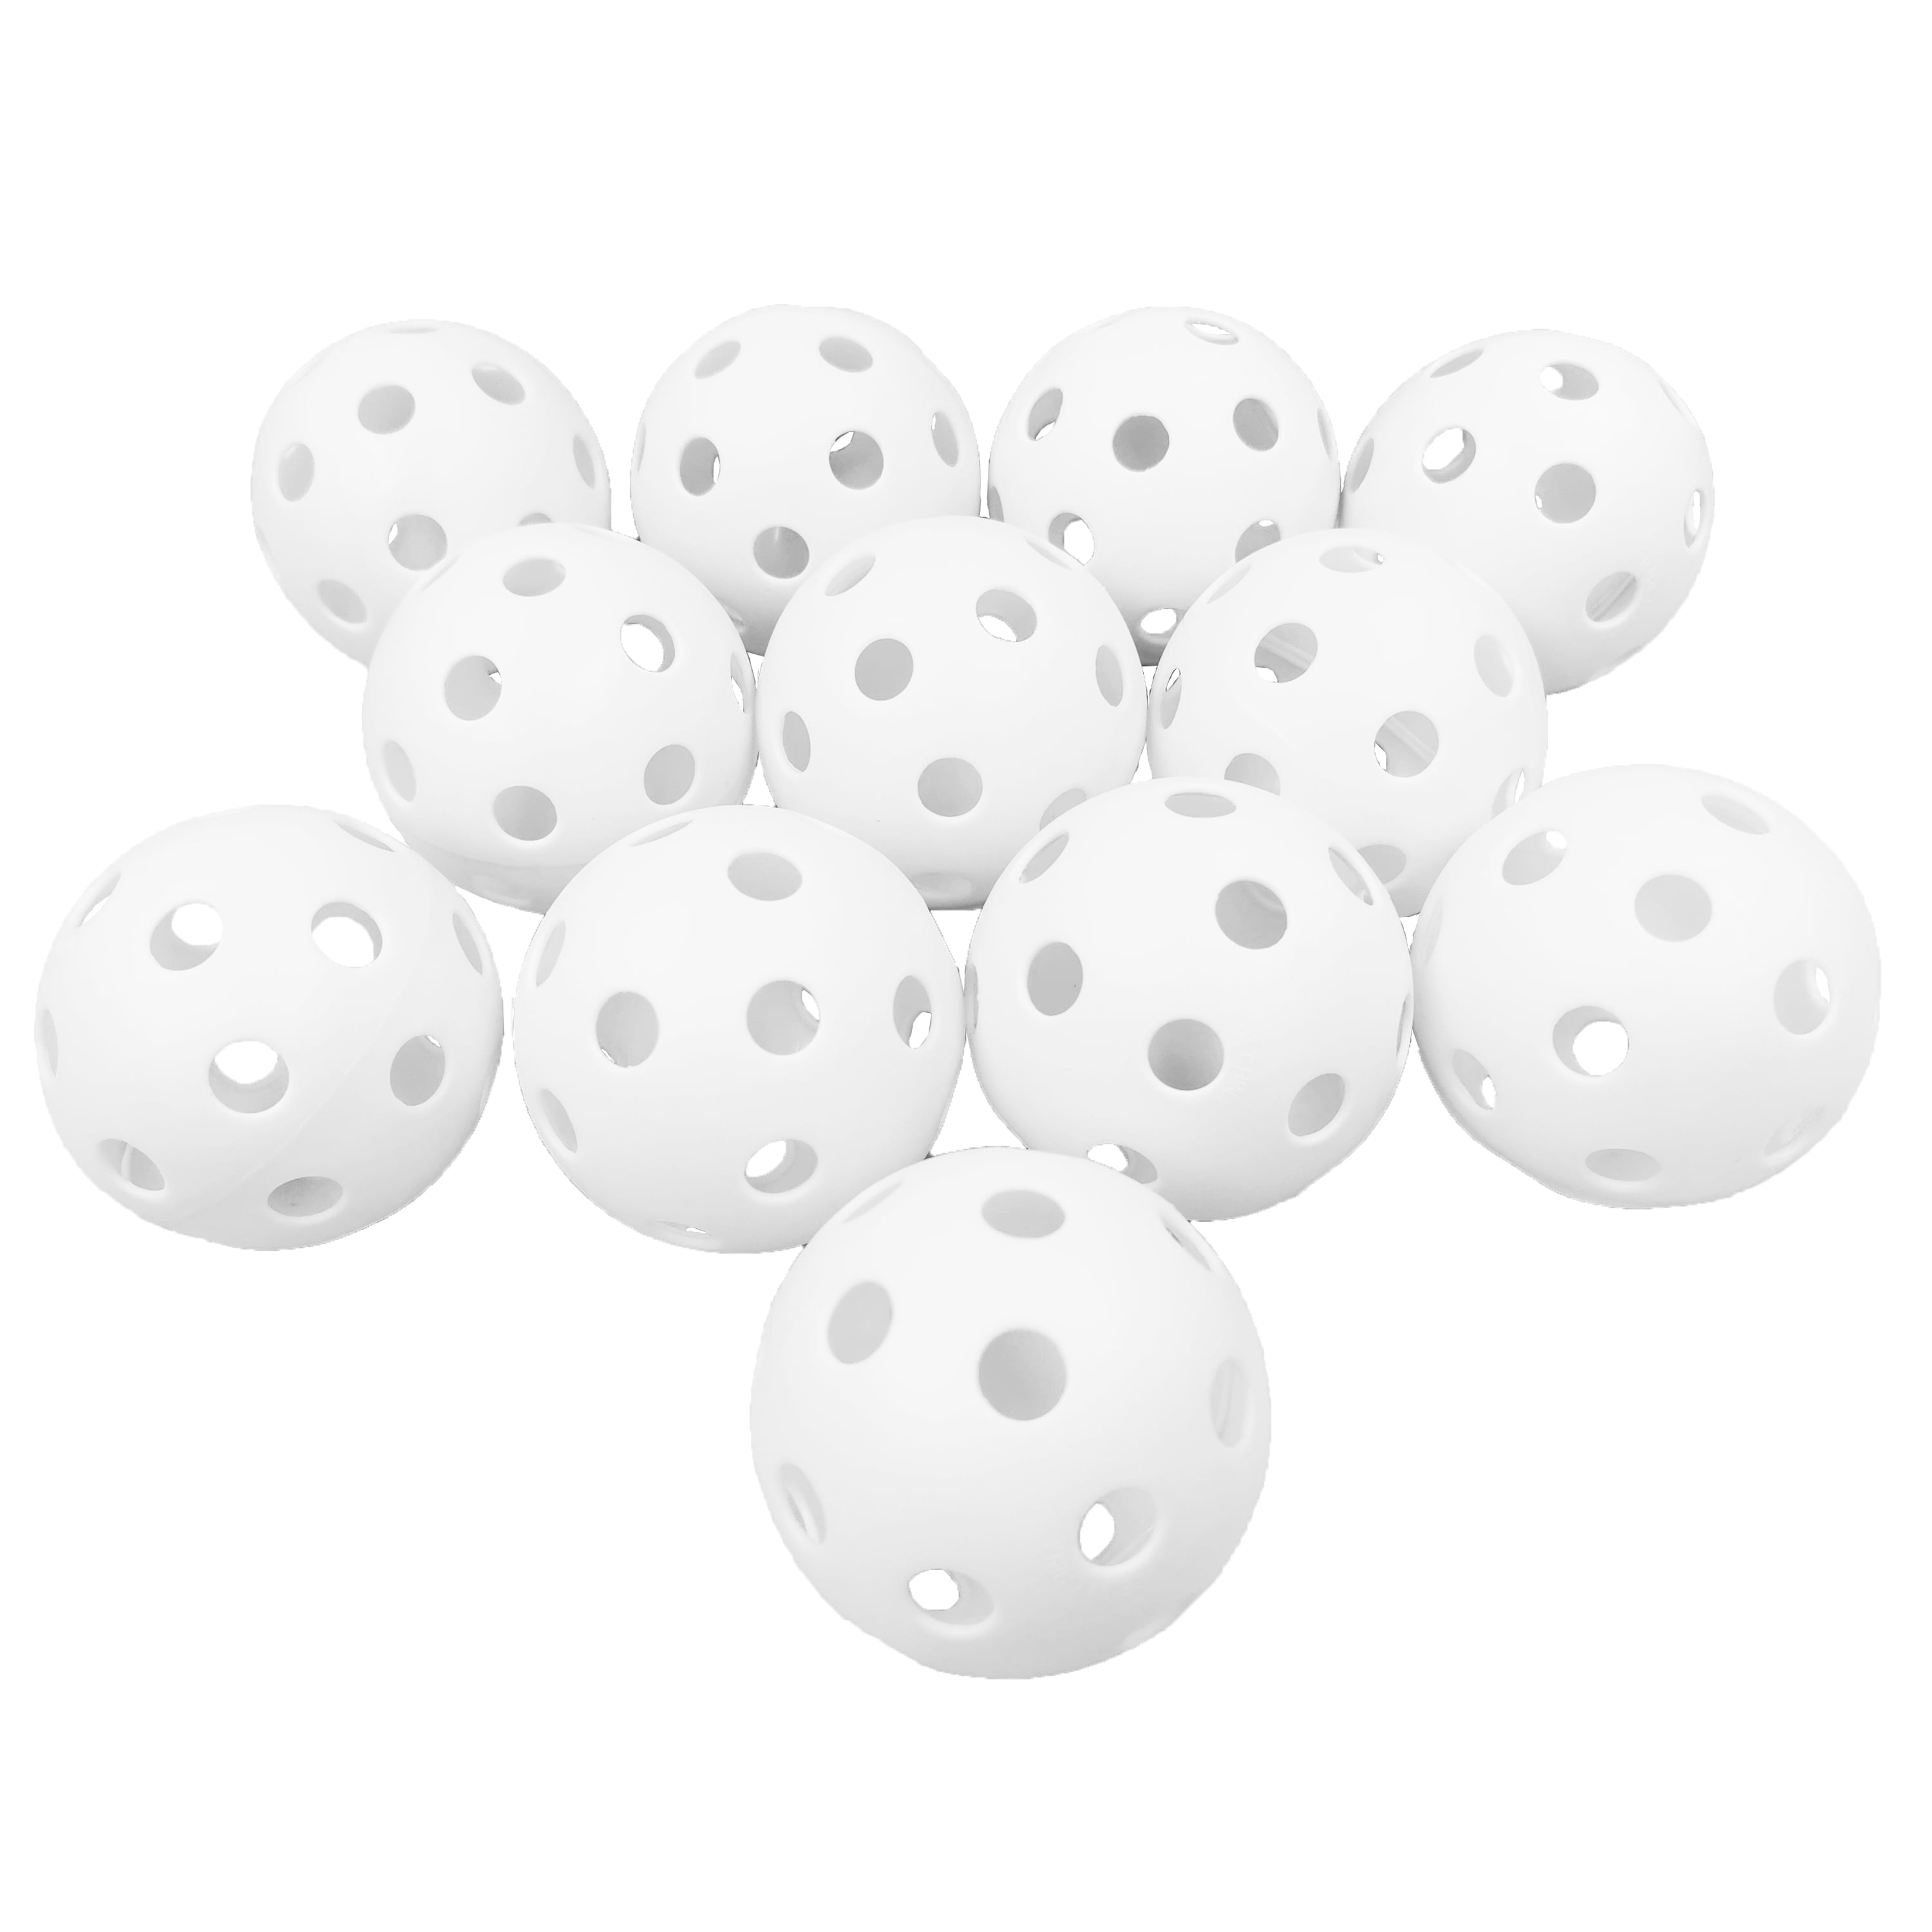 12 PCS Baseballs Wiffle Ball Plastic Lightweight Durable Sport Balls Softball US 